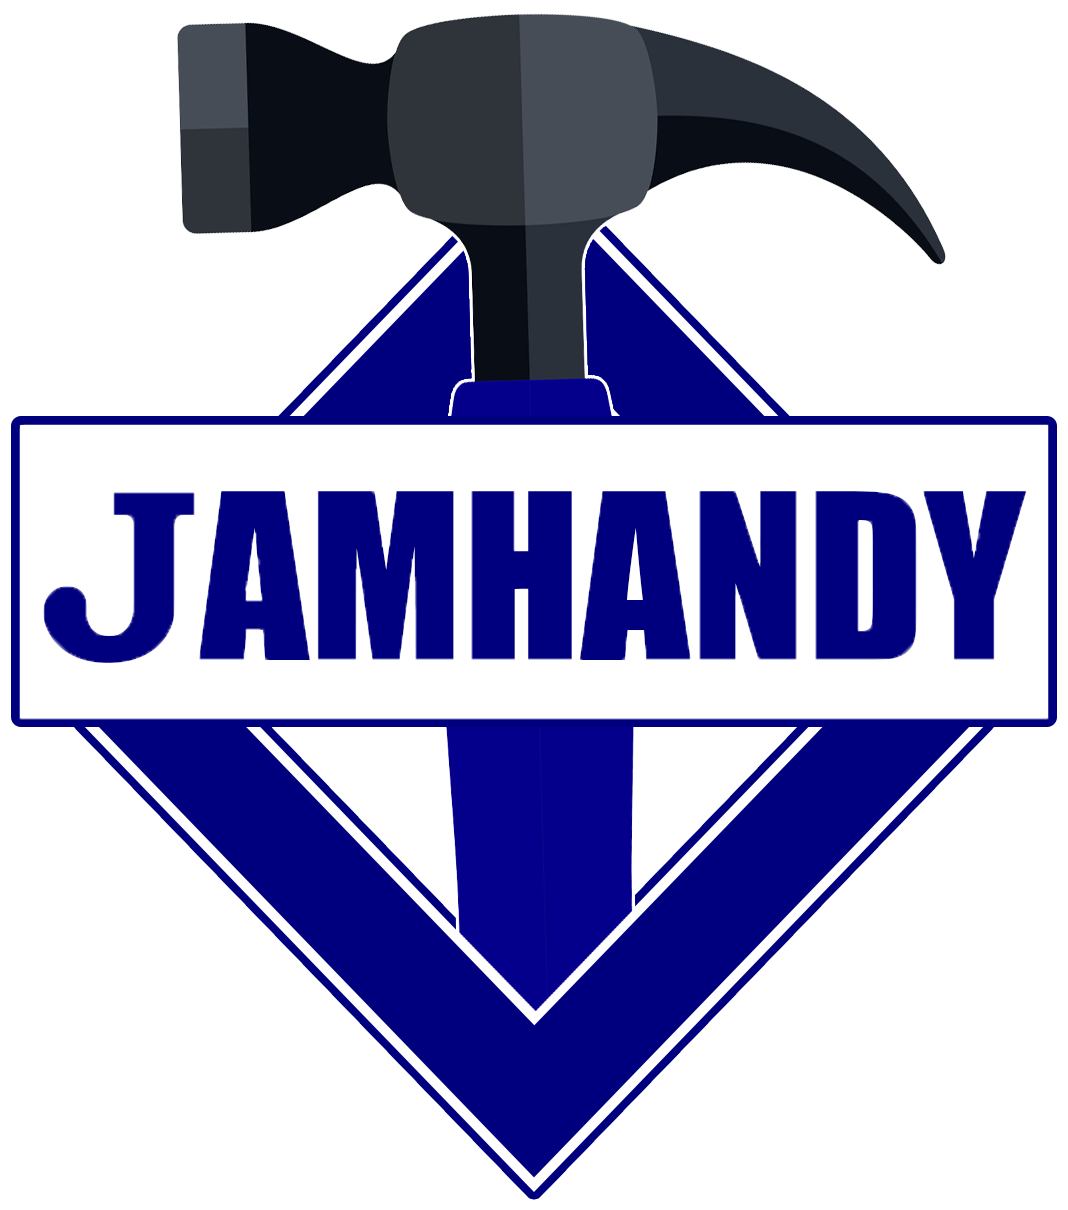 JamHandy